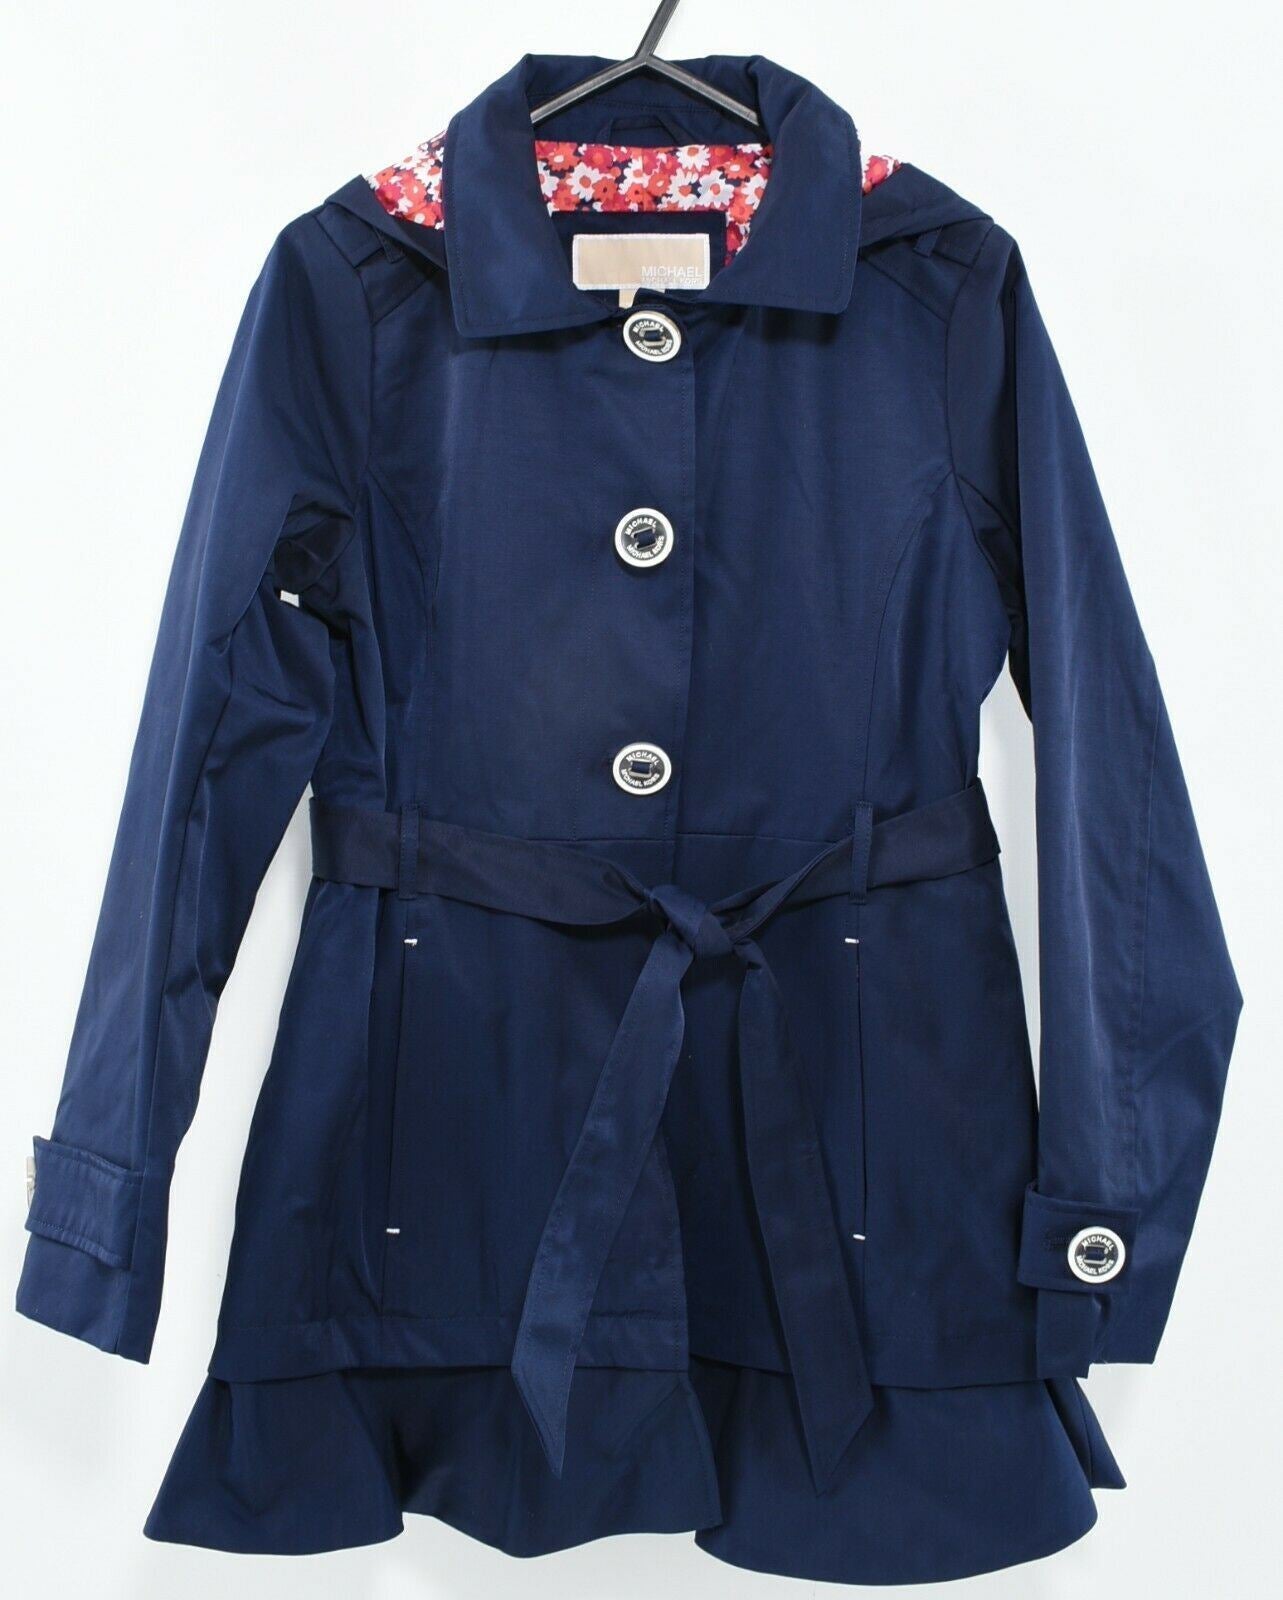 MICHAEL KORS Girls' Mac, Trench Coat / Jacket, Navy Blue, size 6 - 7  years